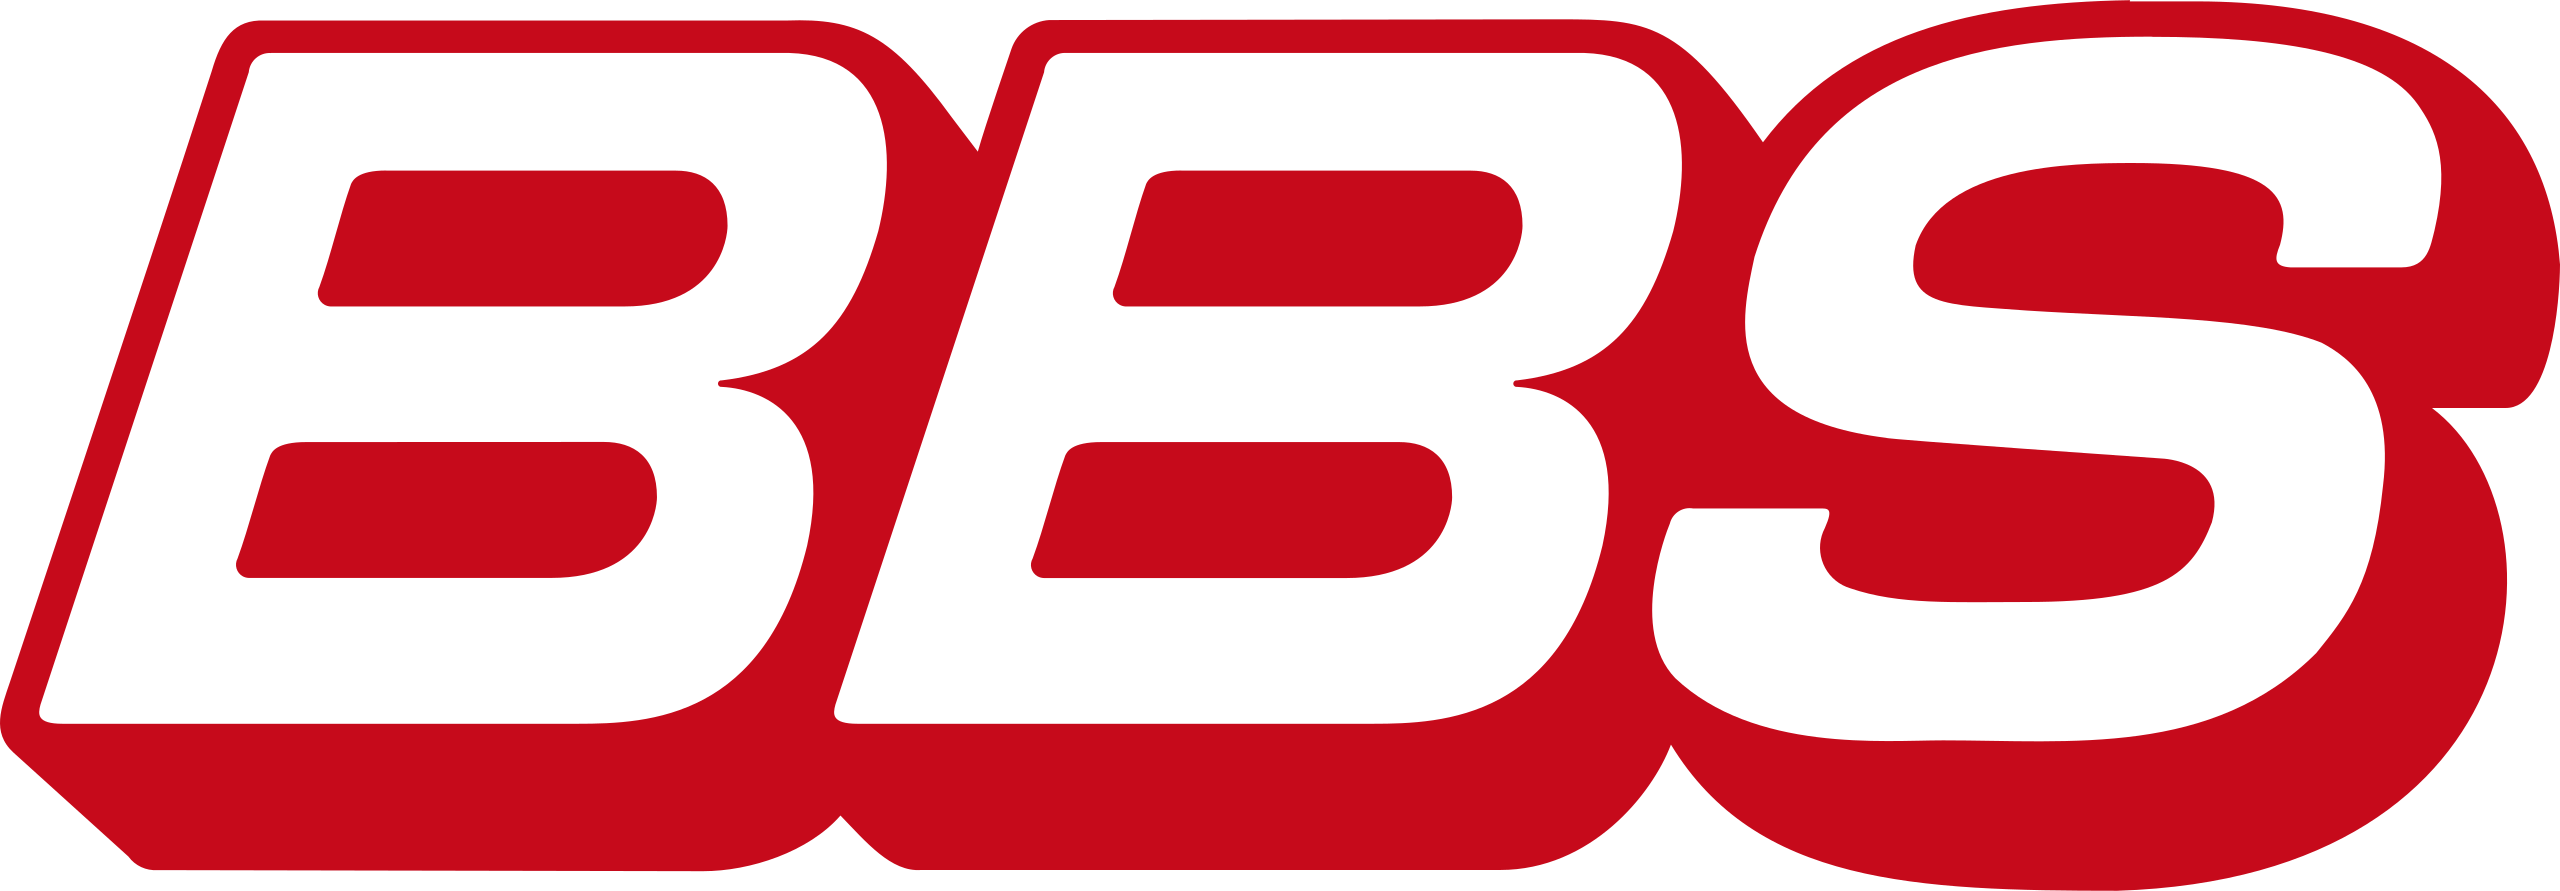 BBS_logo_svg